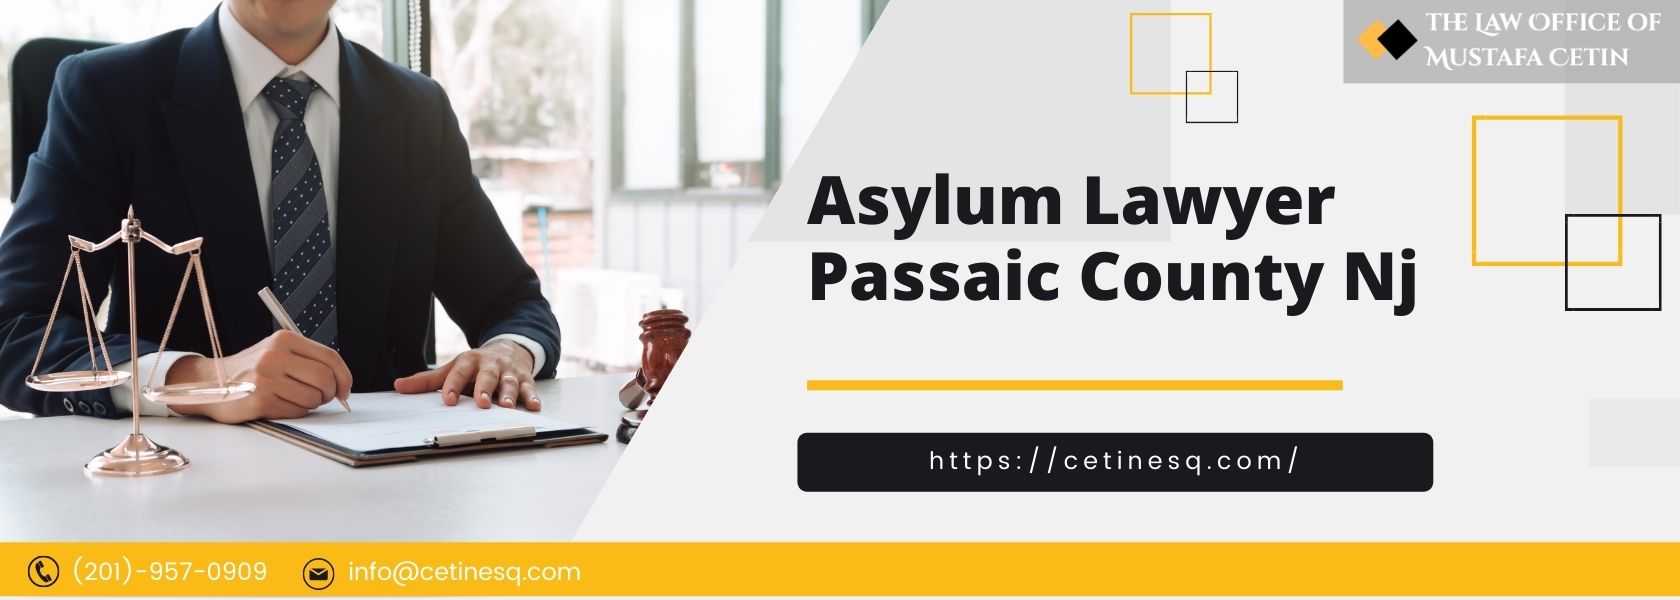 Asylum Lawyer Passaic County Nj￼